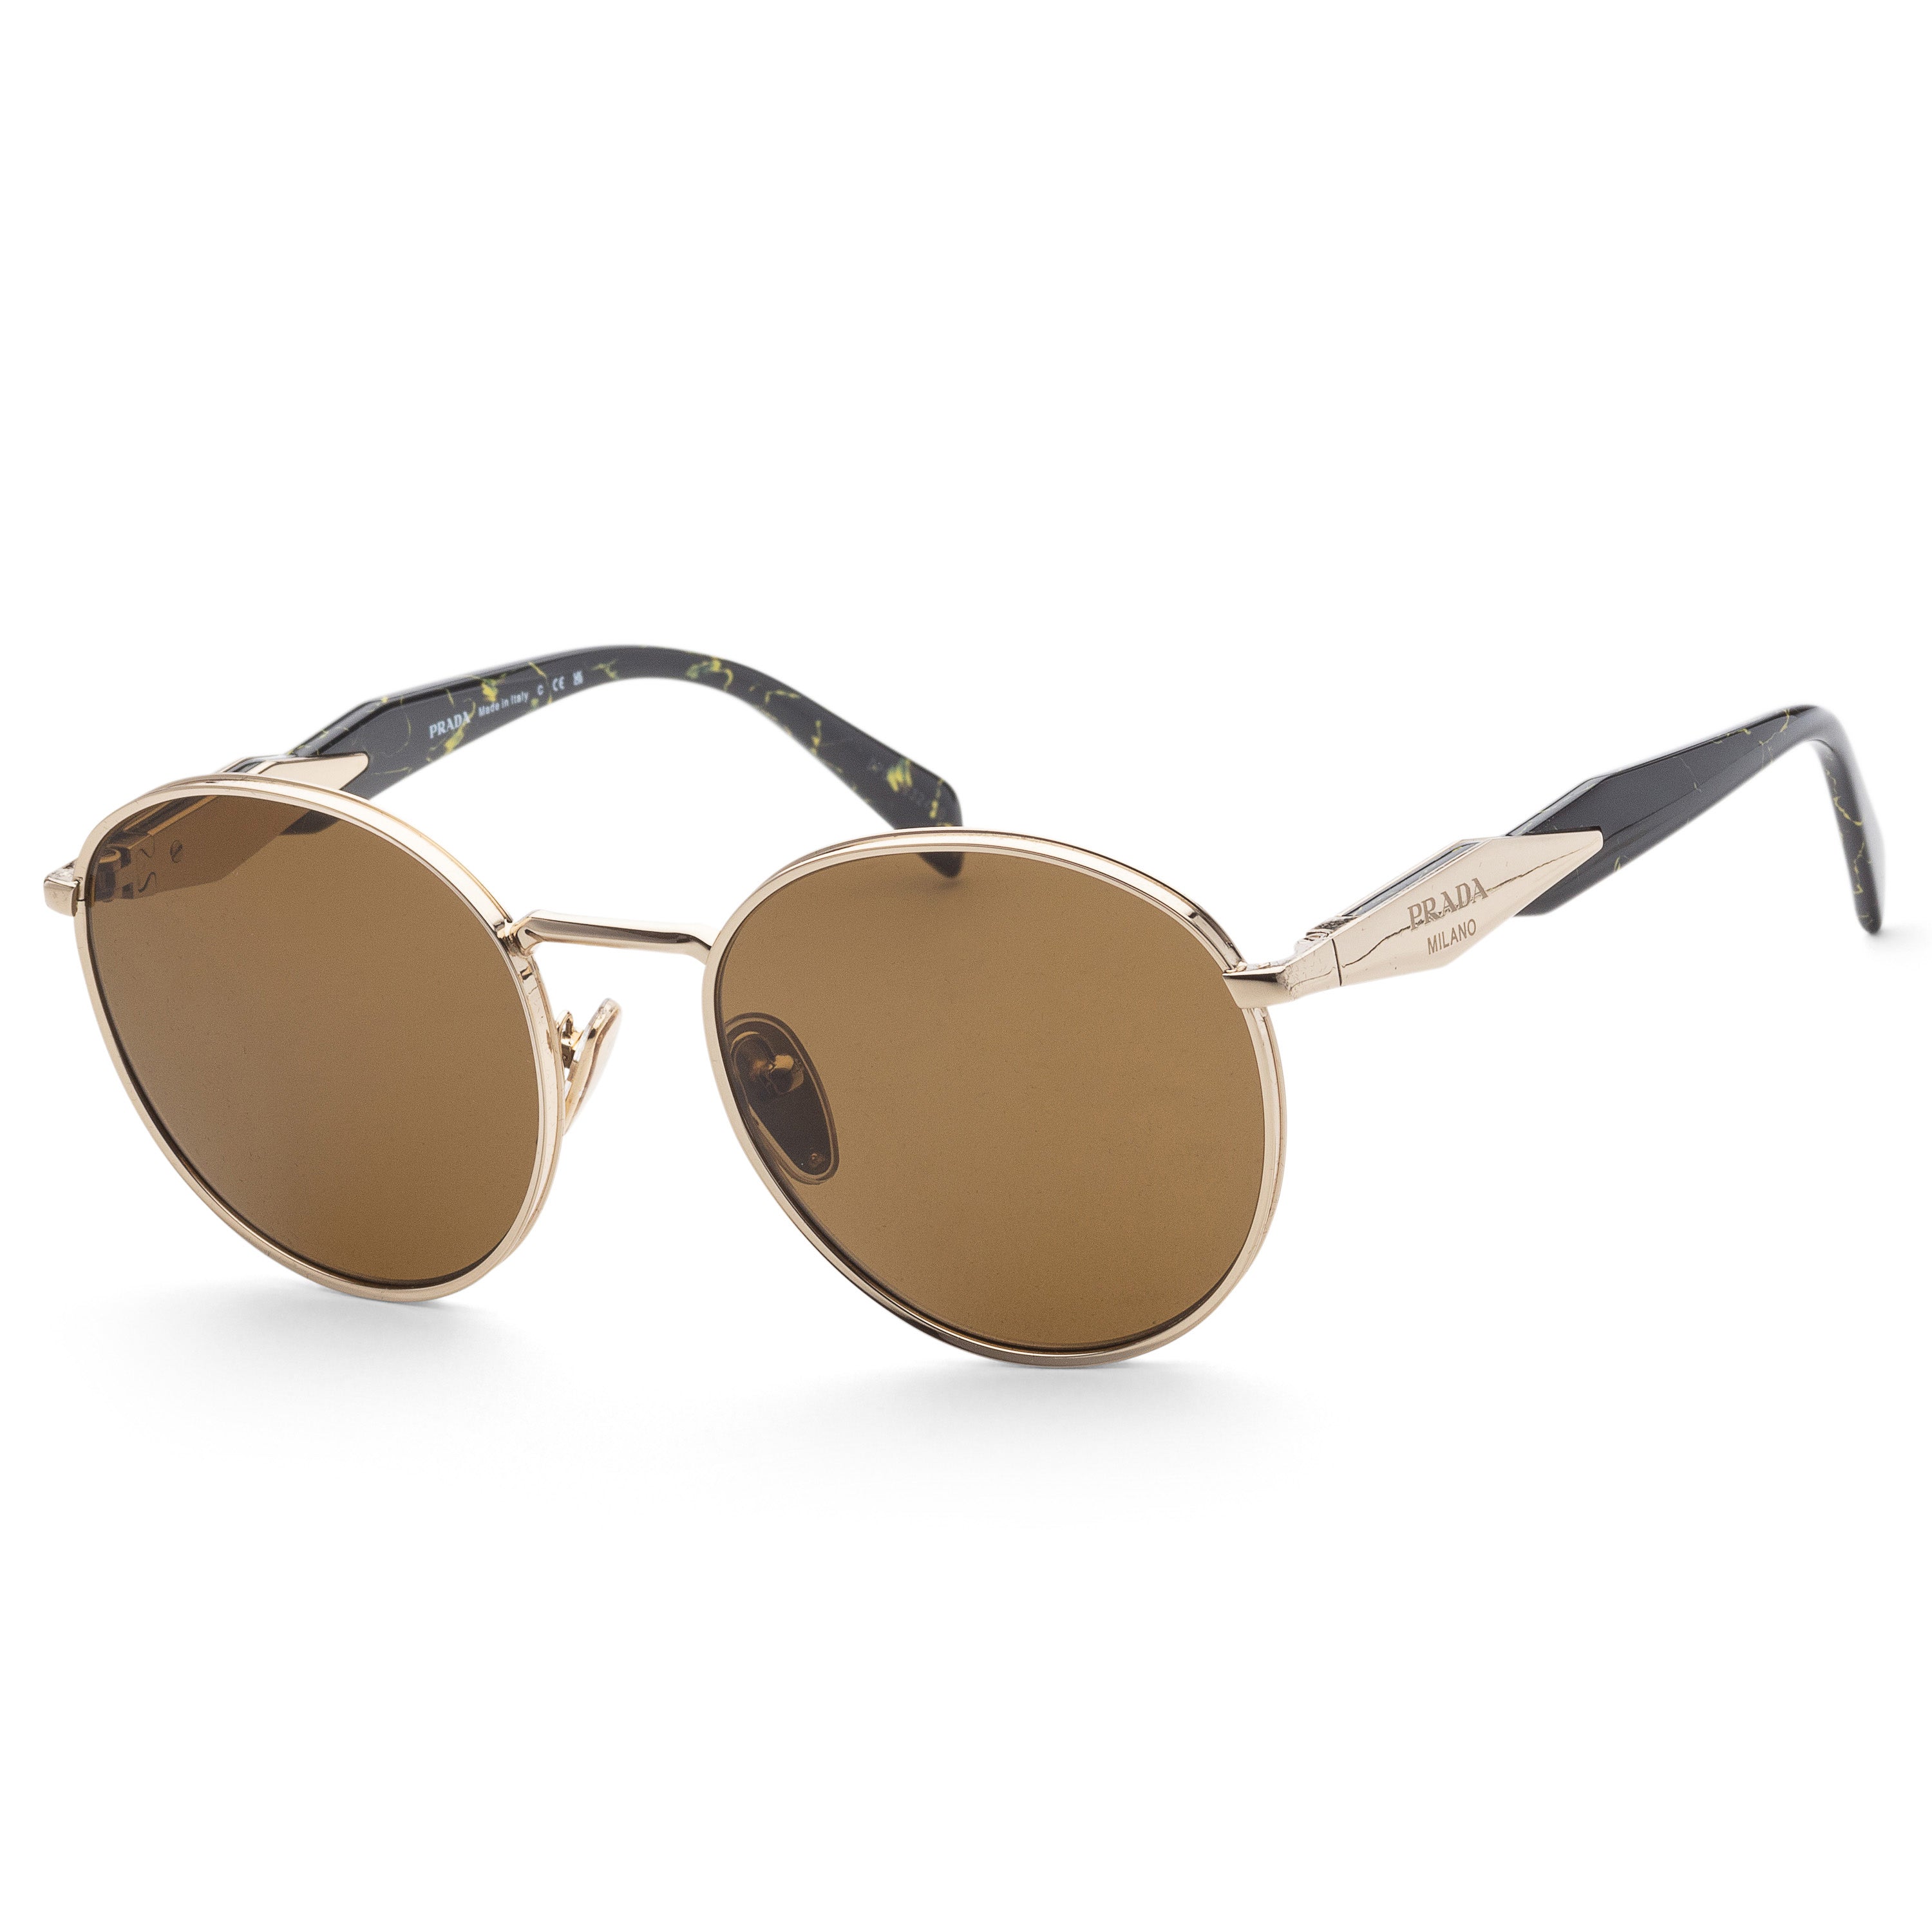 title:Prada Women's PR-56ZS-ZVN01T Fashion 54mm Pale Gold Sunglasses;color:Pale Gold